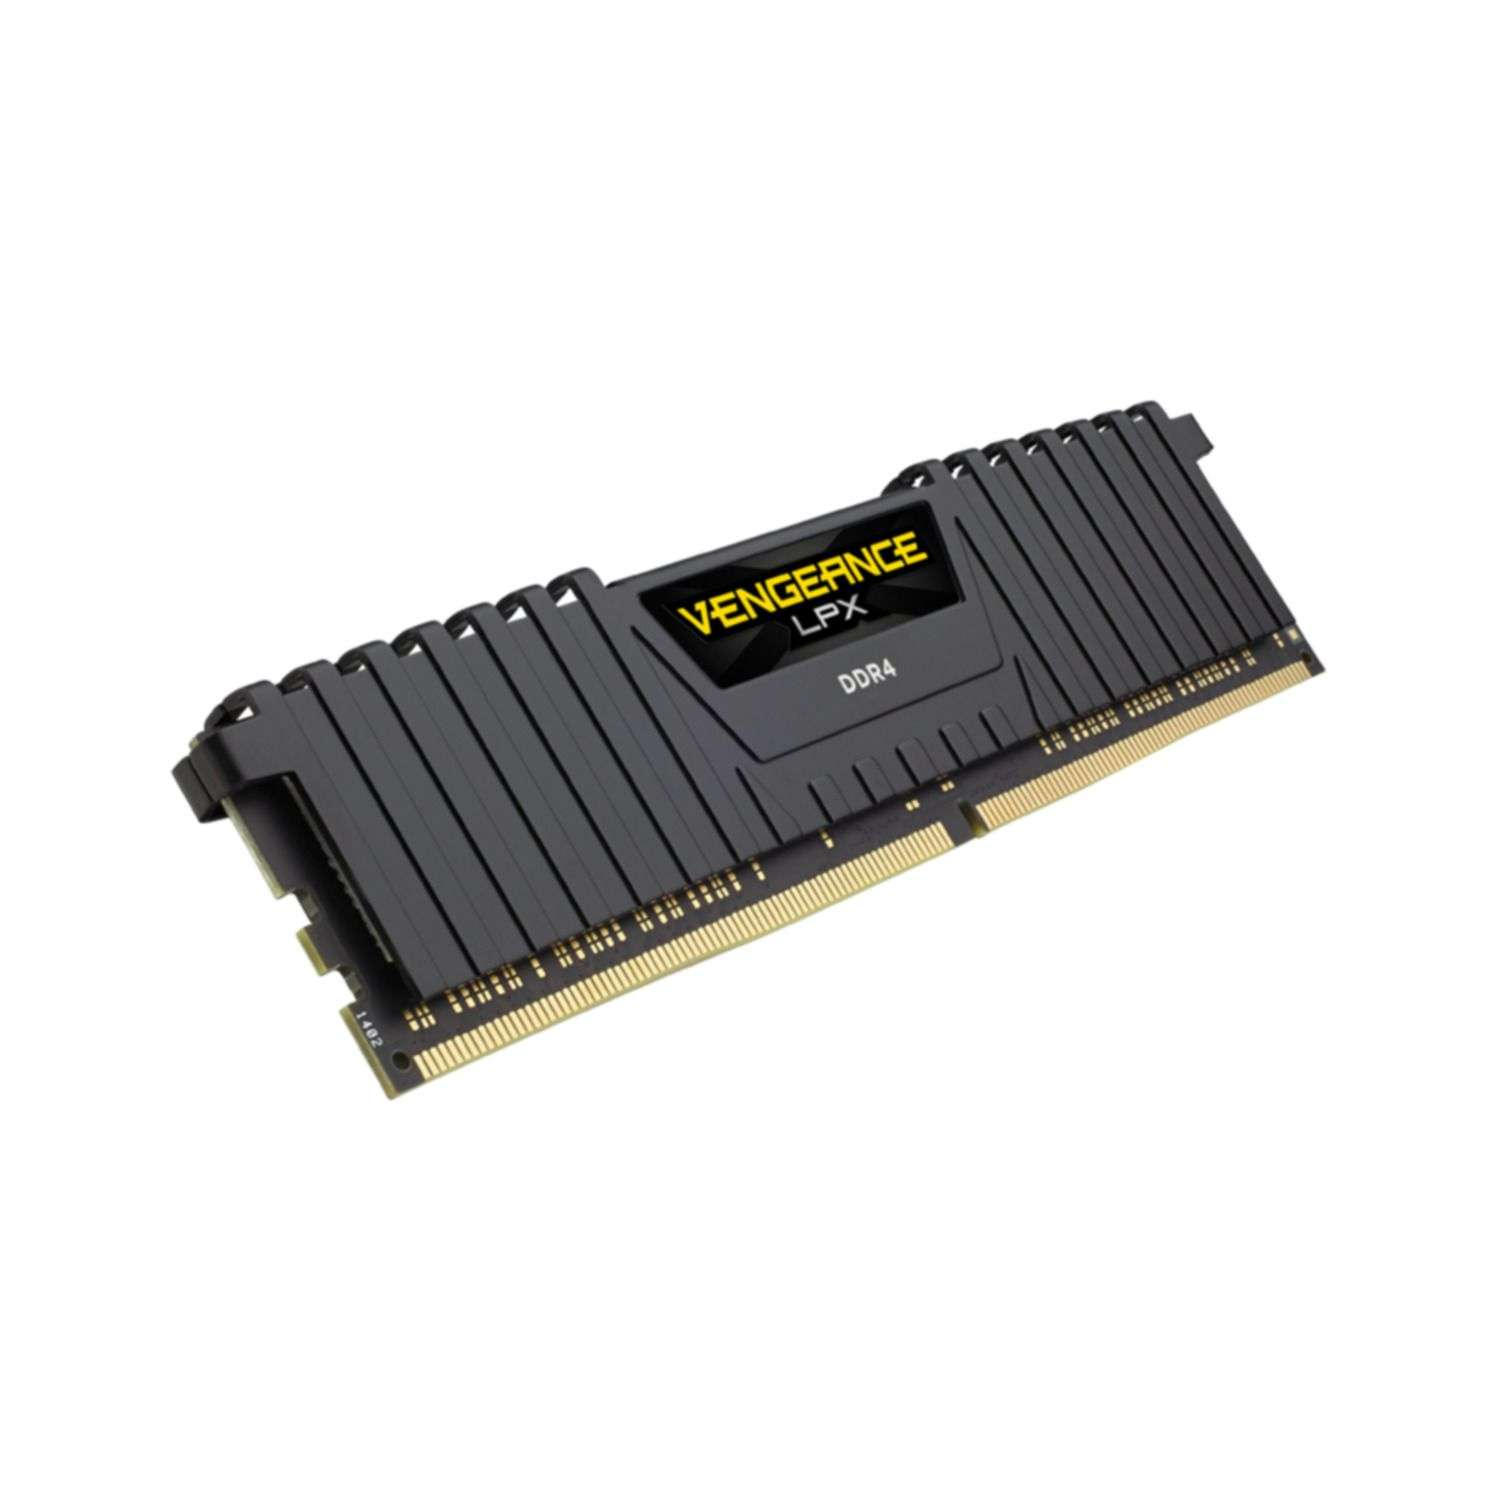 CORSAIR GB Arbeitsspeicher 2x16GB;1,35V;VengeanceLPX;black for AMD DDR4 Ryzen 32